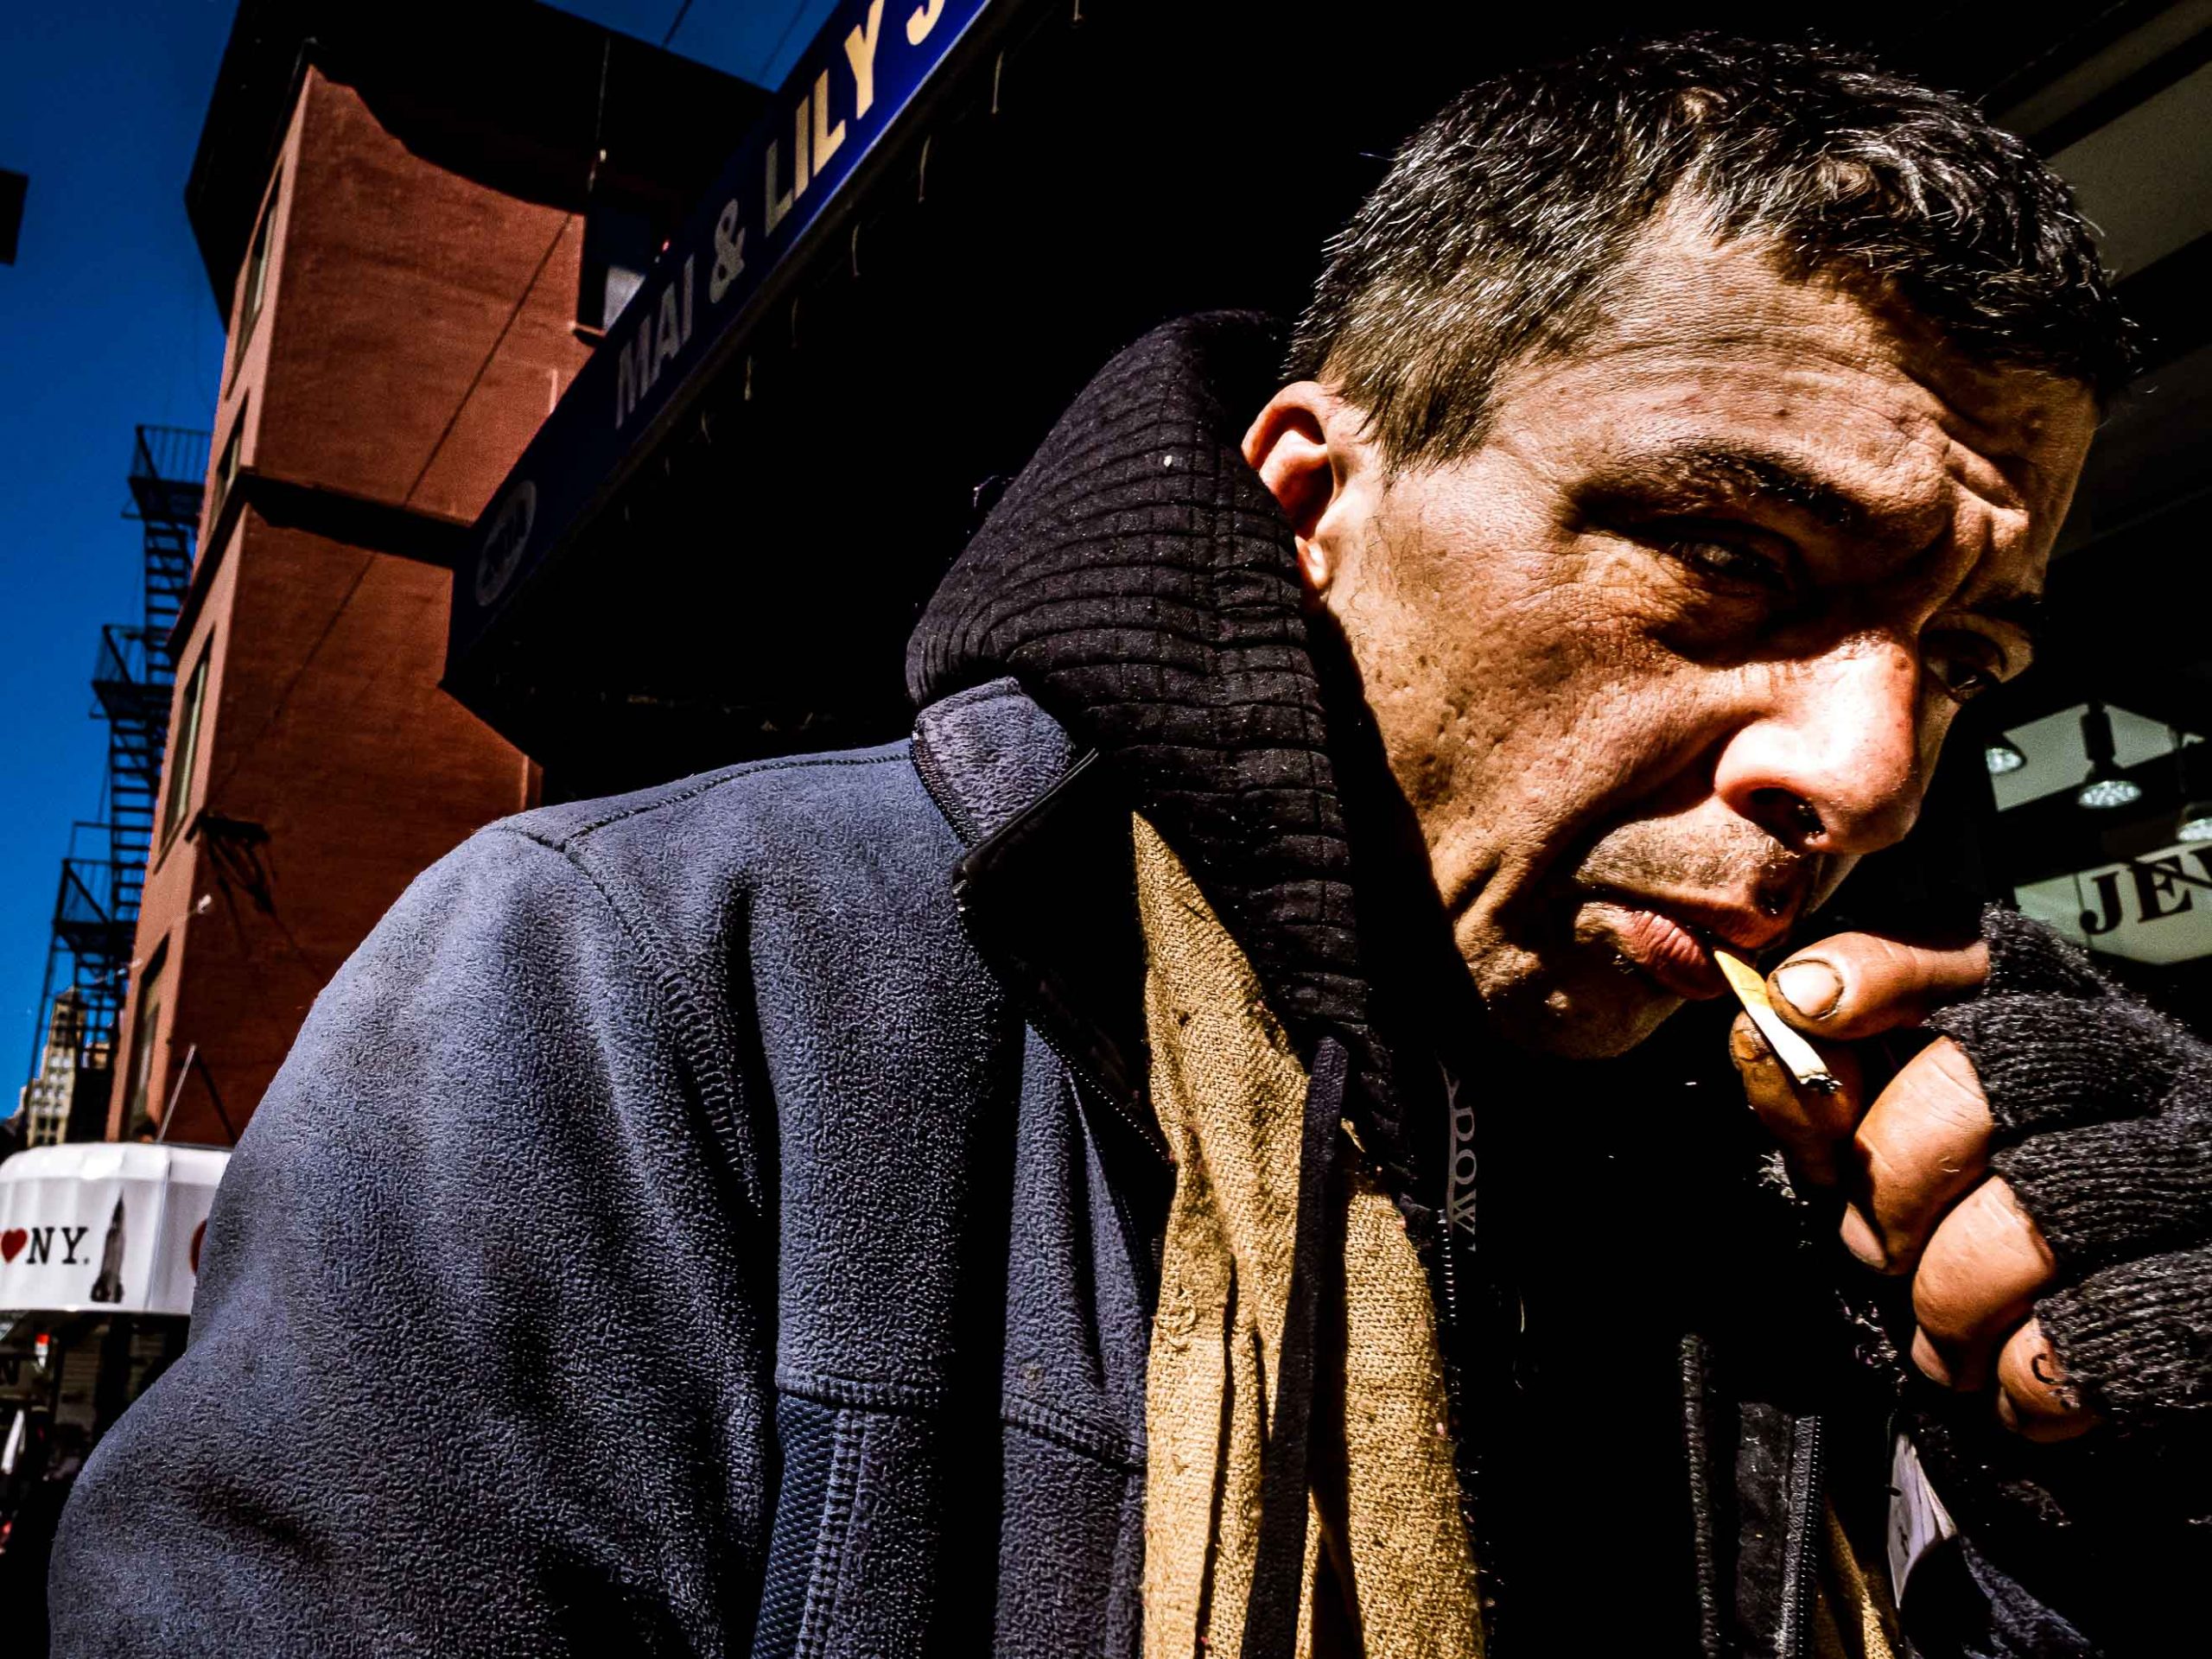 Rauchender Mann in New York Citiy